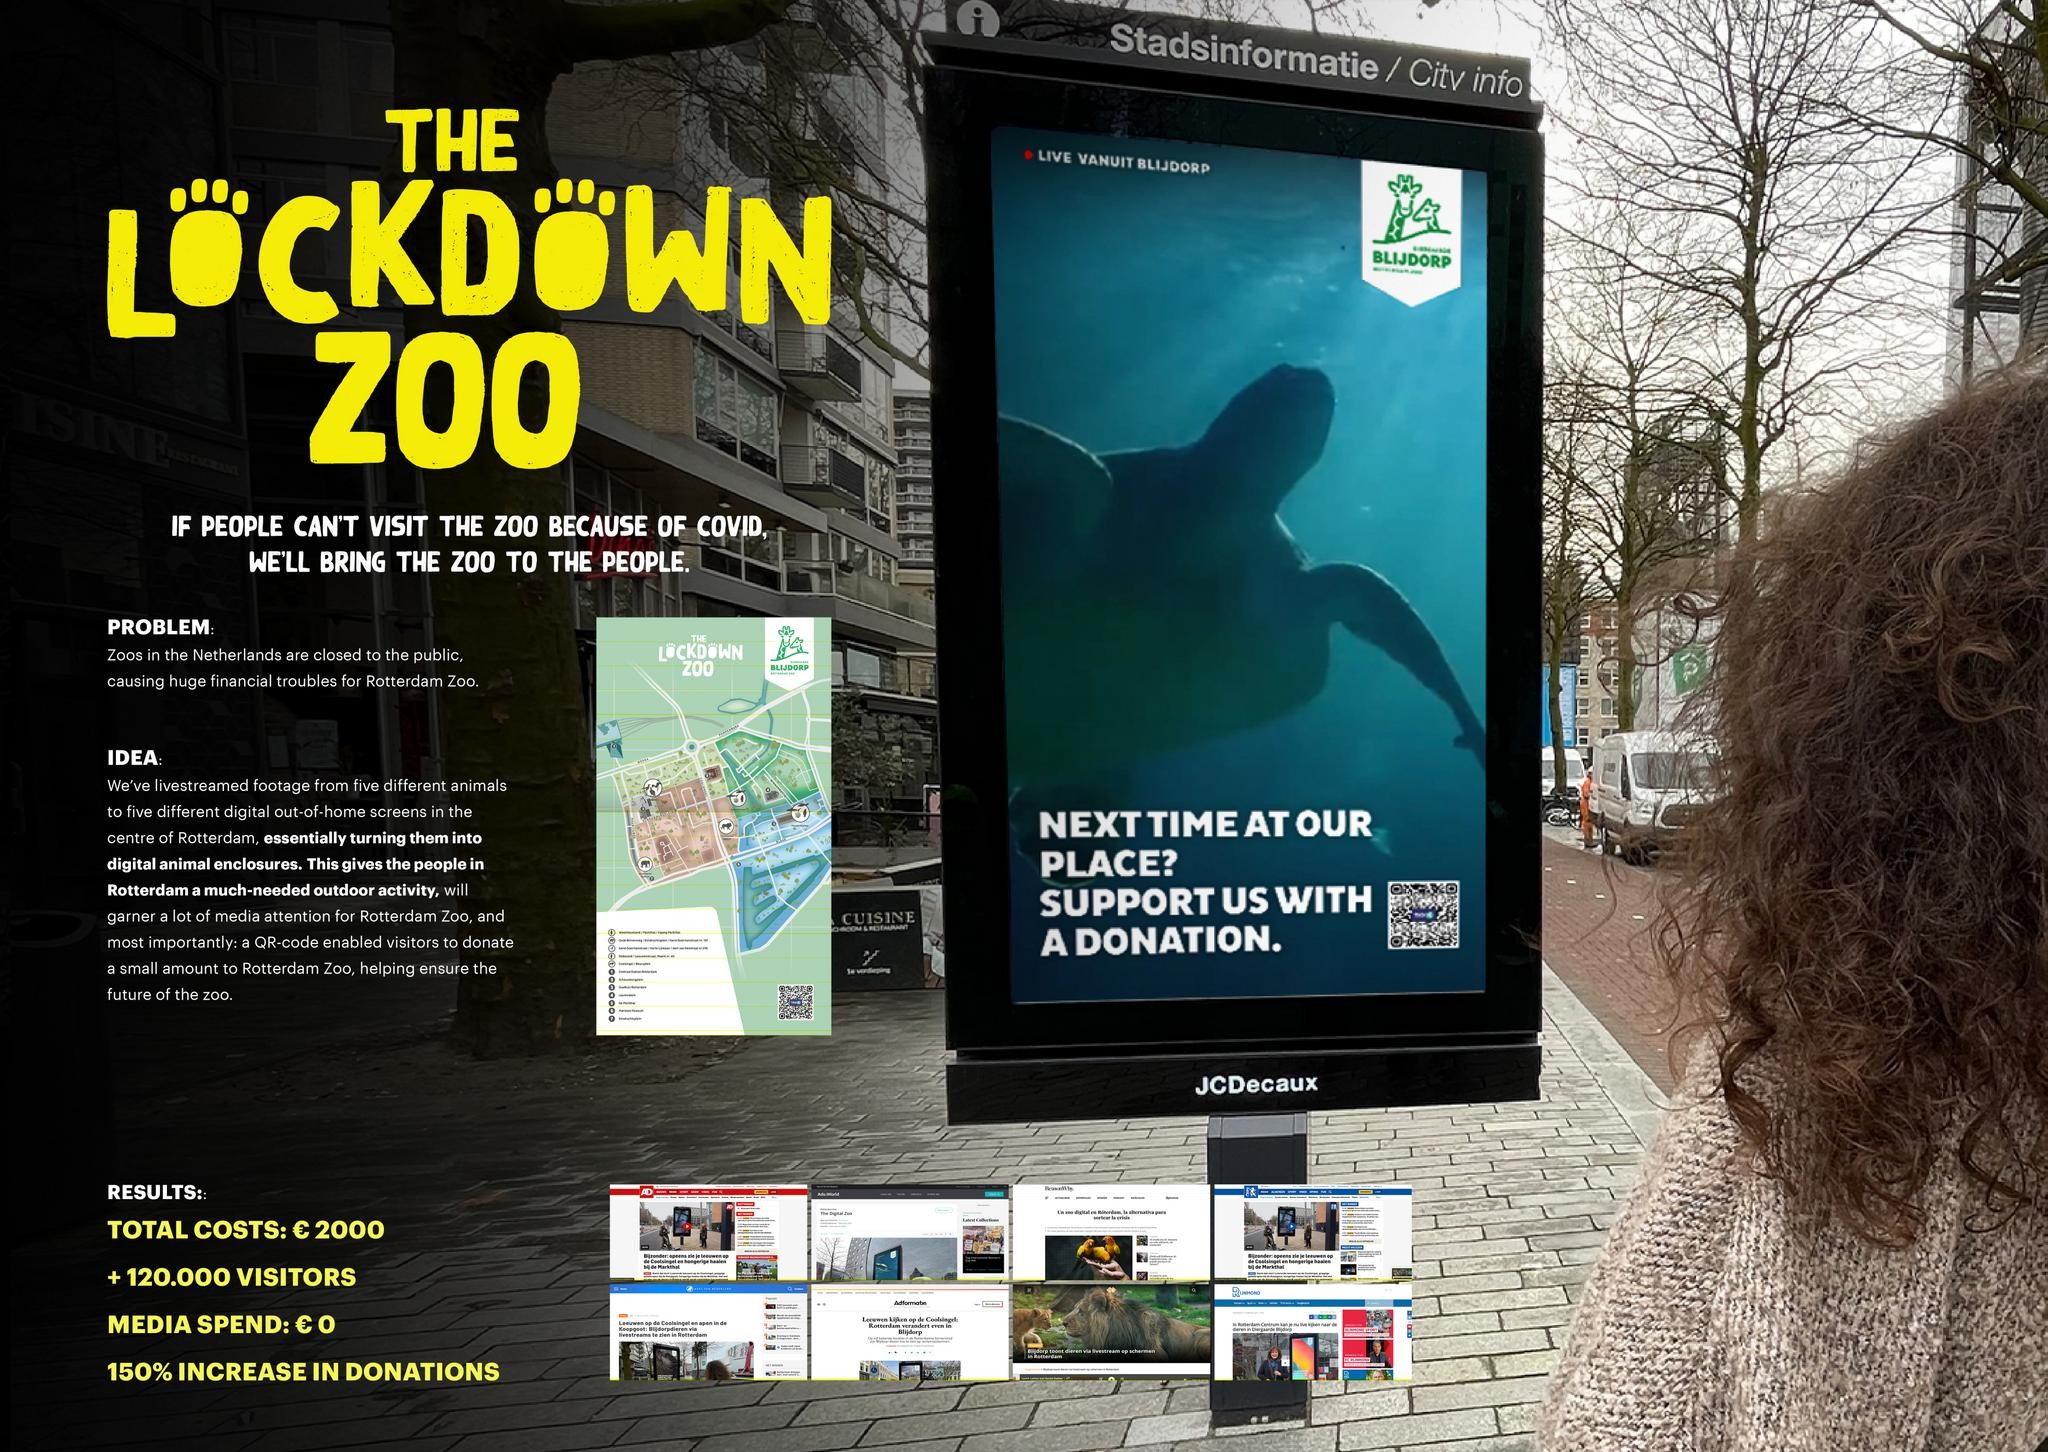 The Lockdown Zoo